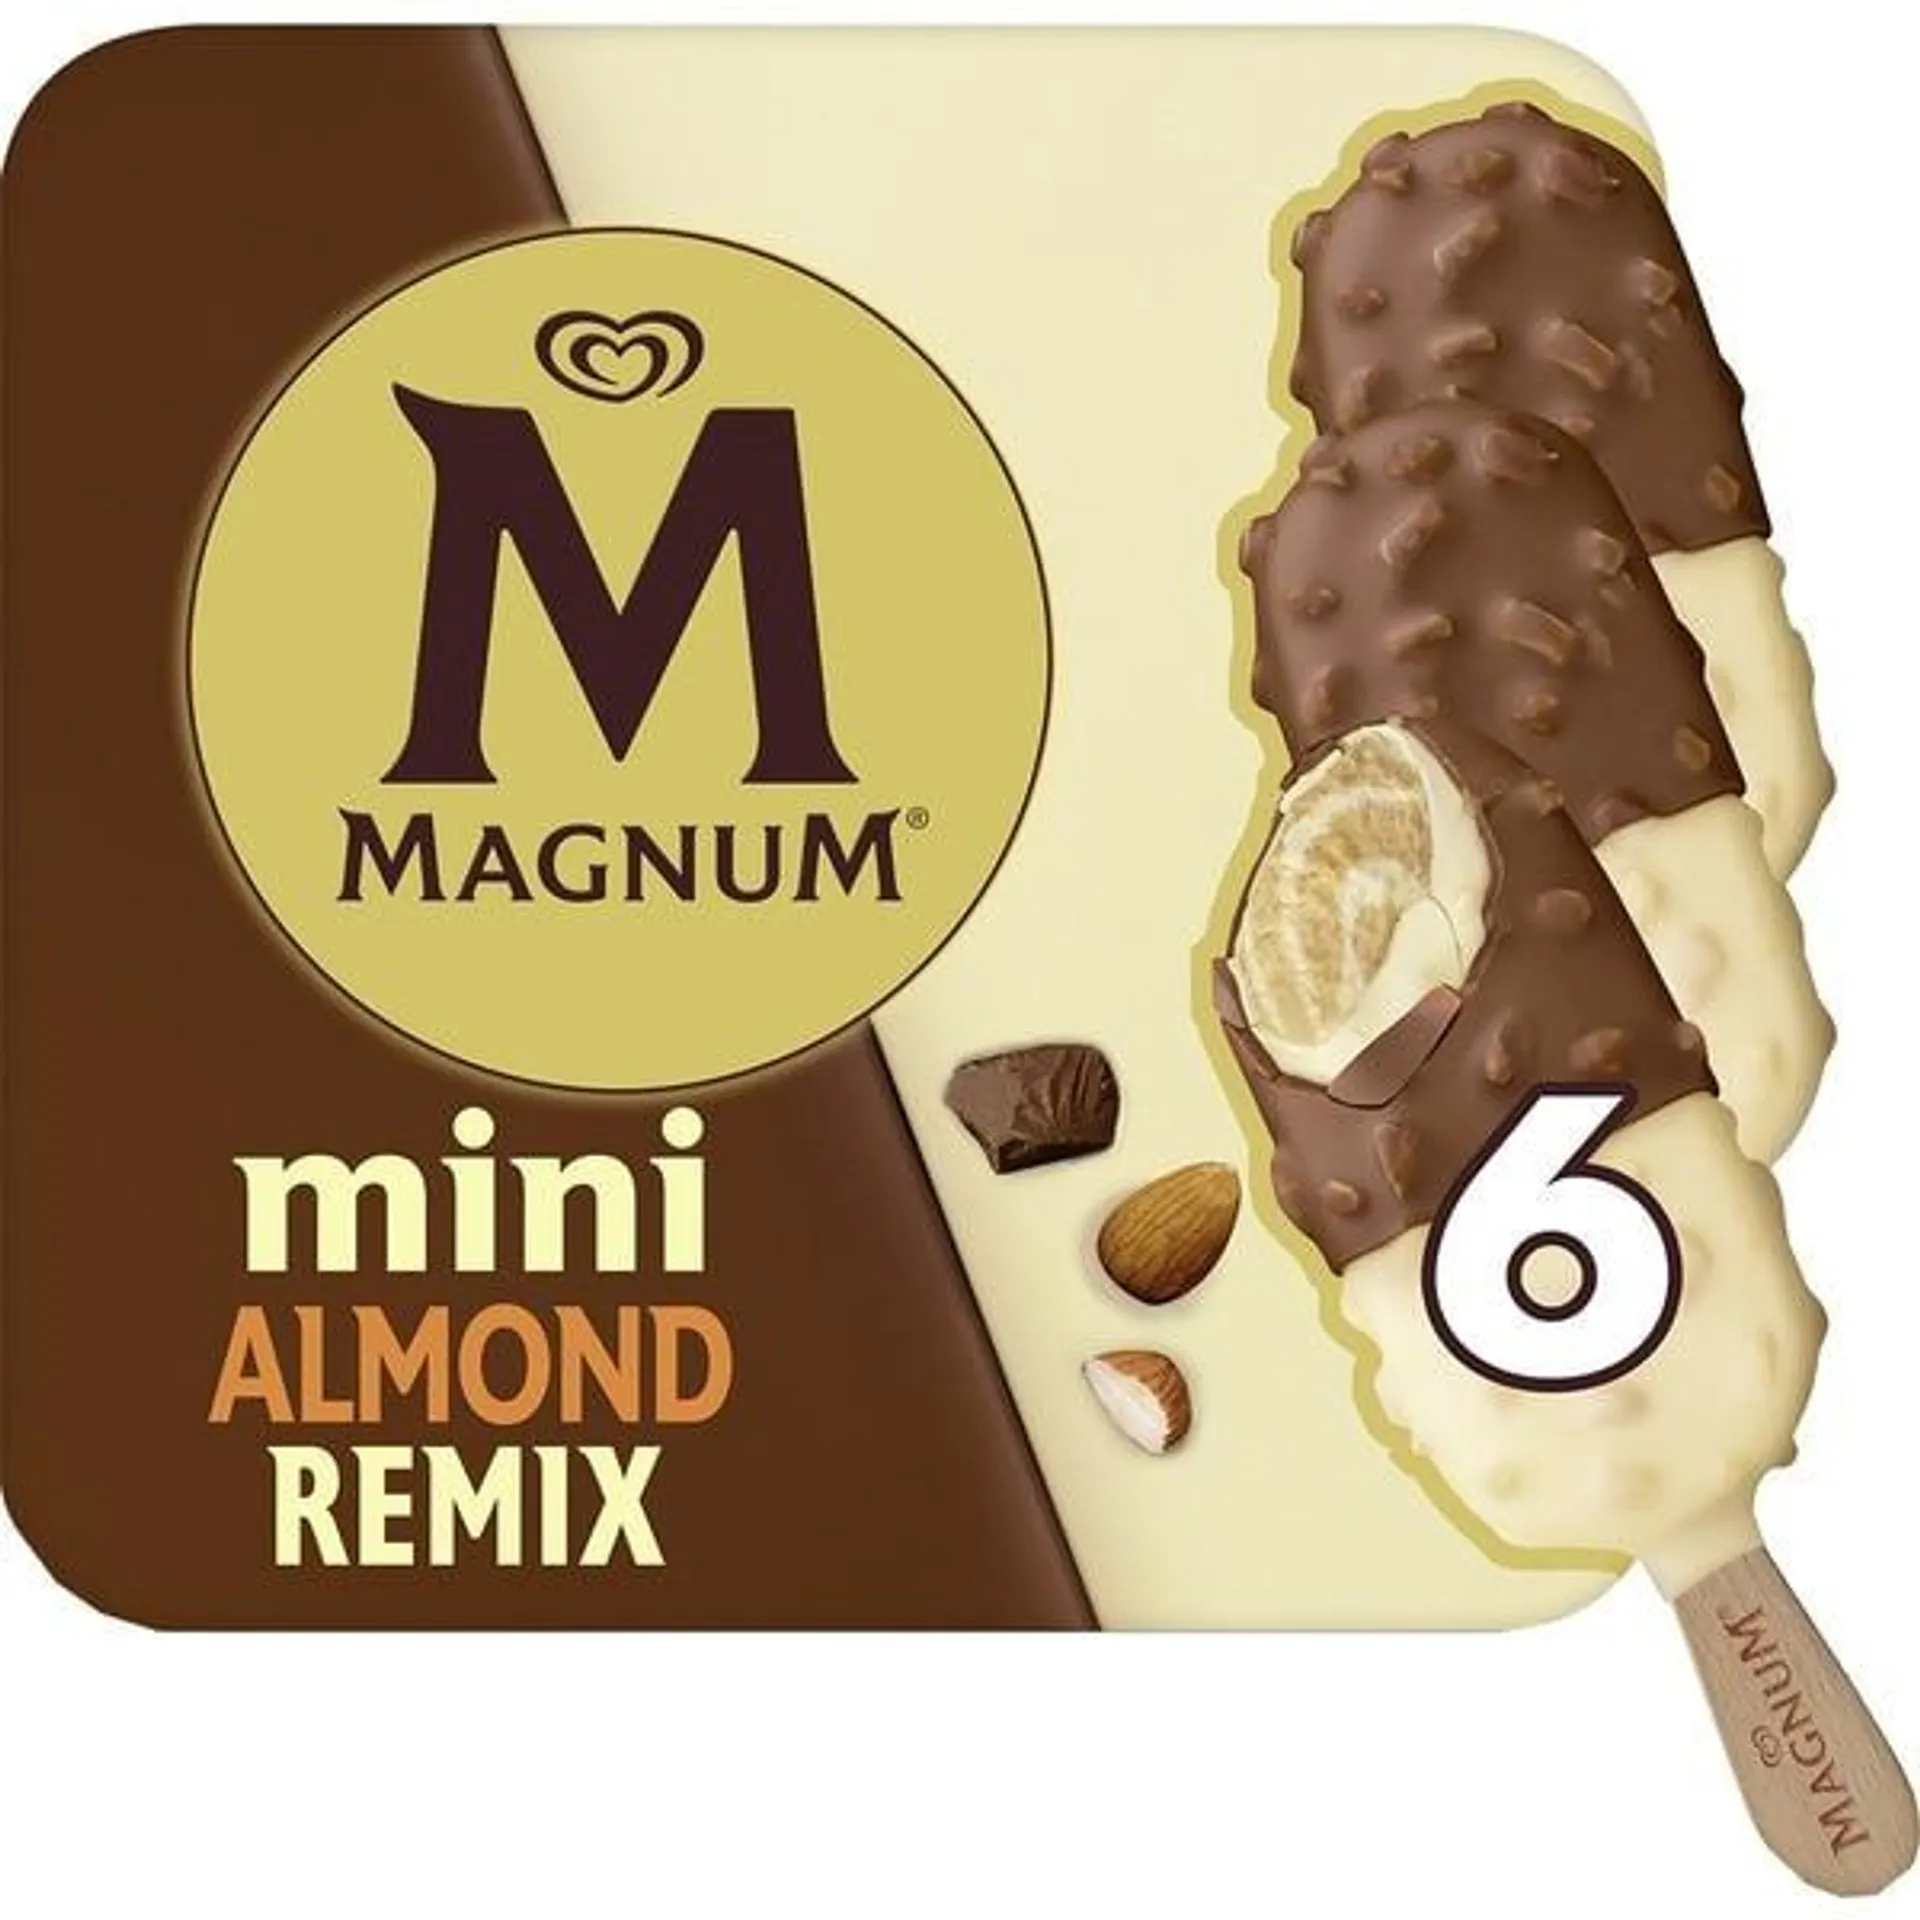 Gelado de Amêndoa Remix Pack 6 unidades embalagem 55 ml Magnum Mini